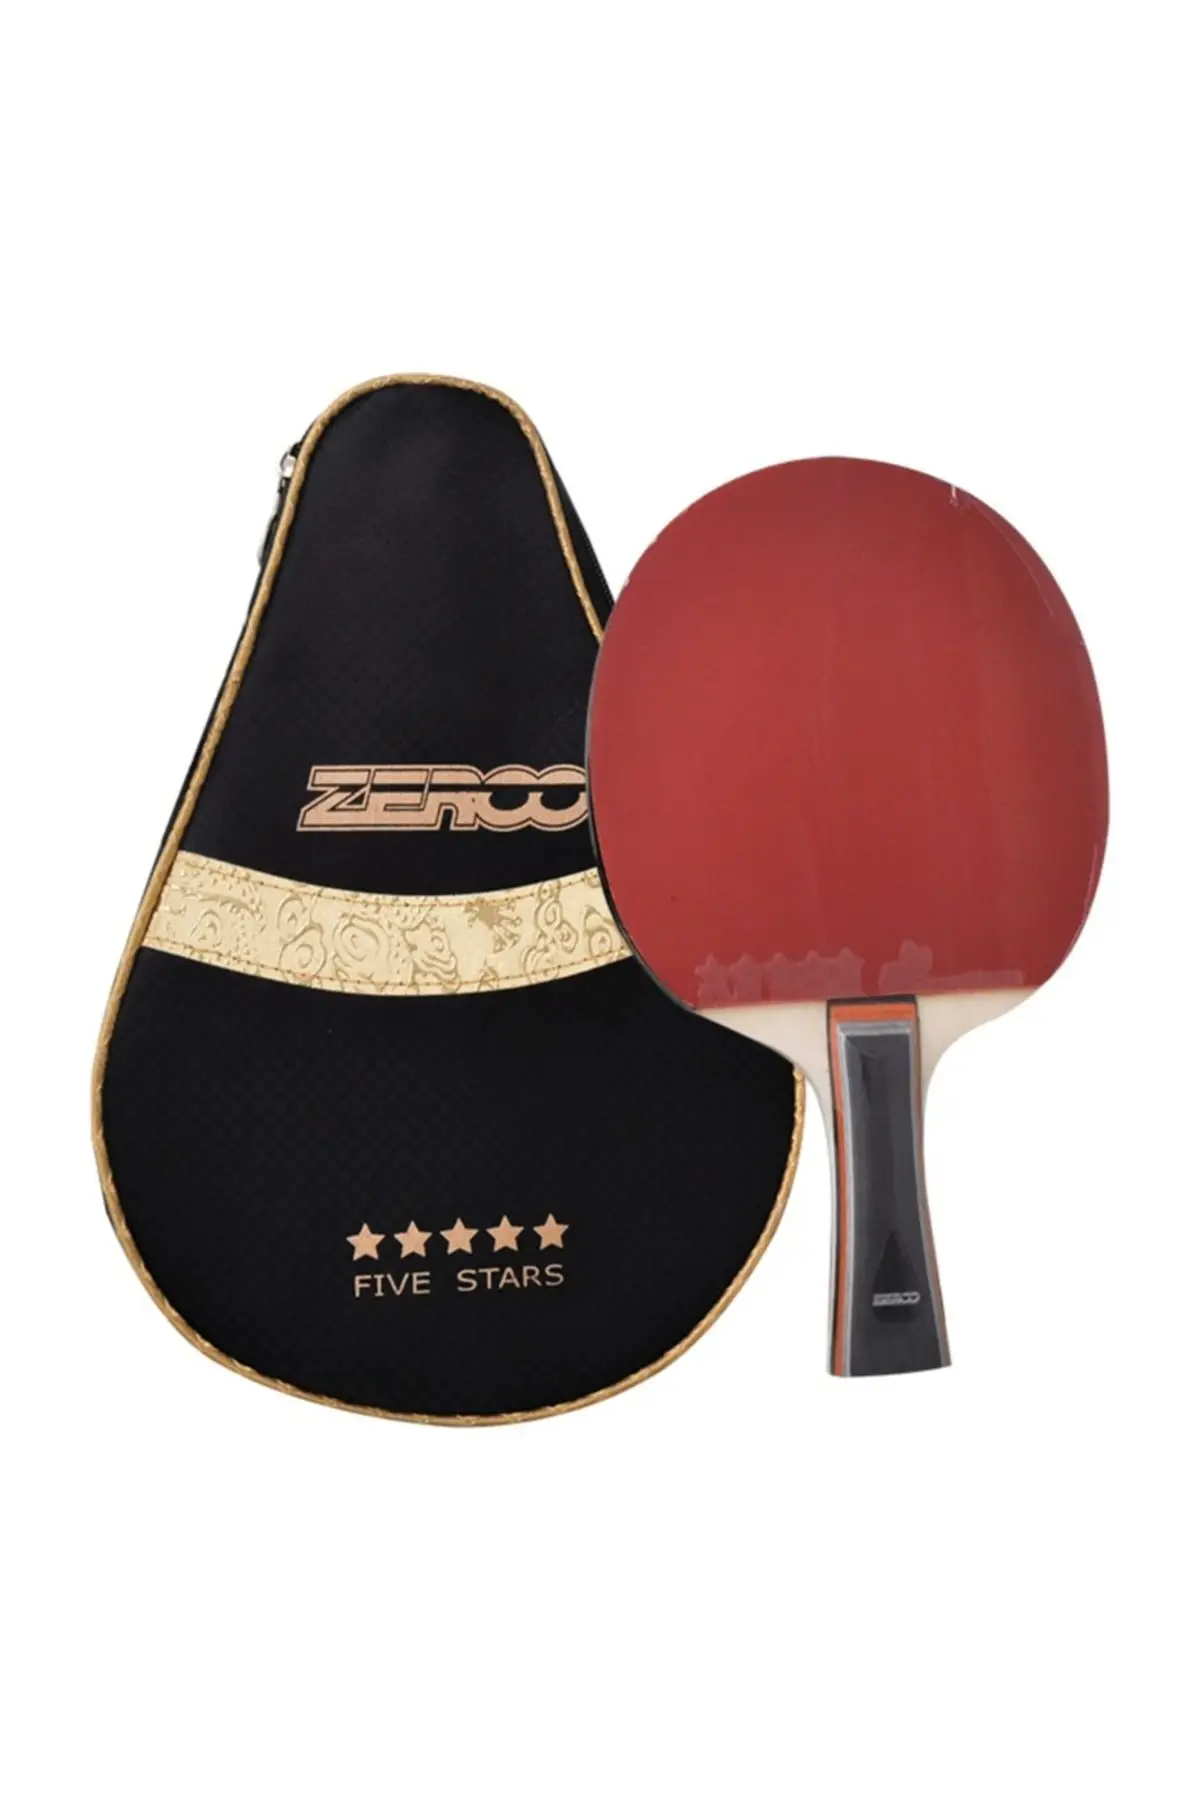 Table Tennis Racket 5 Star Bag Tennis Equipment & Accessory Outdoor